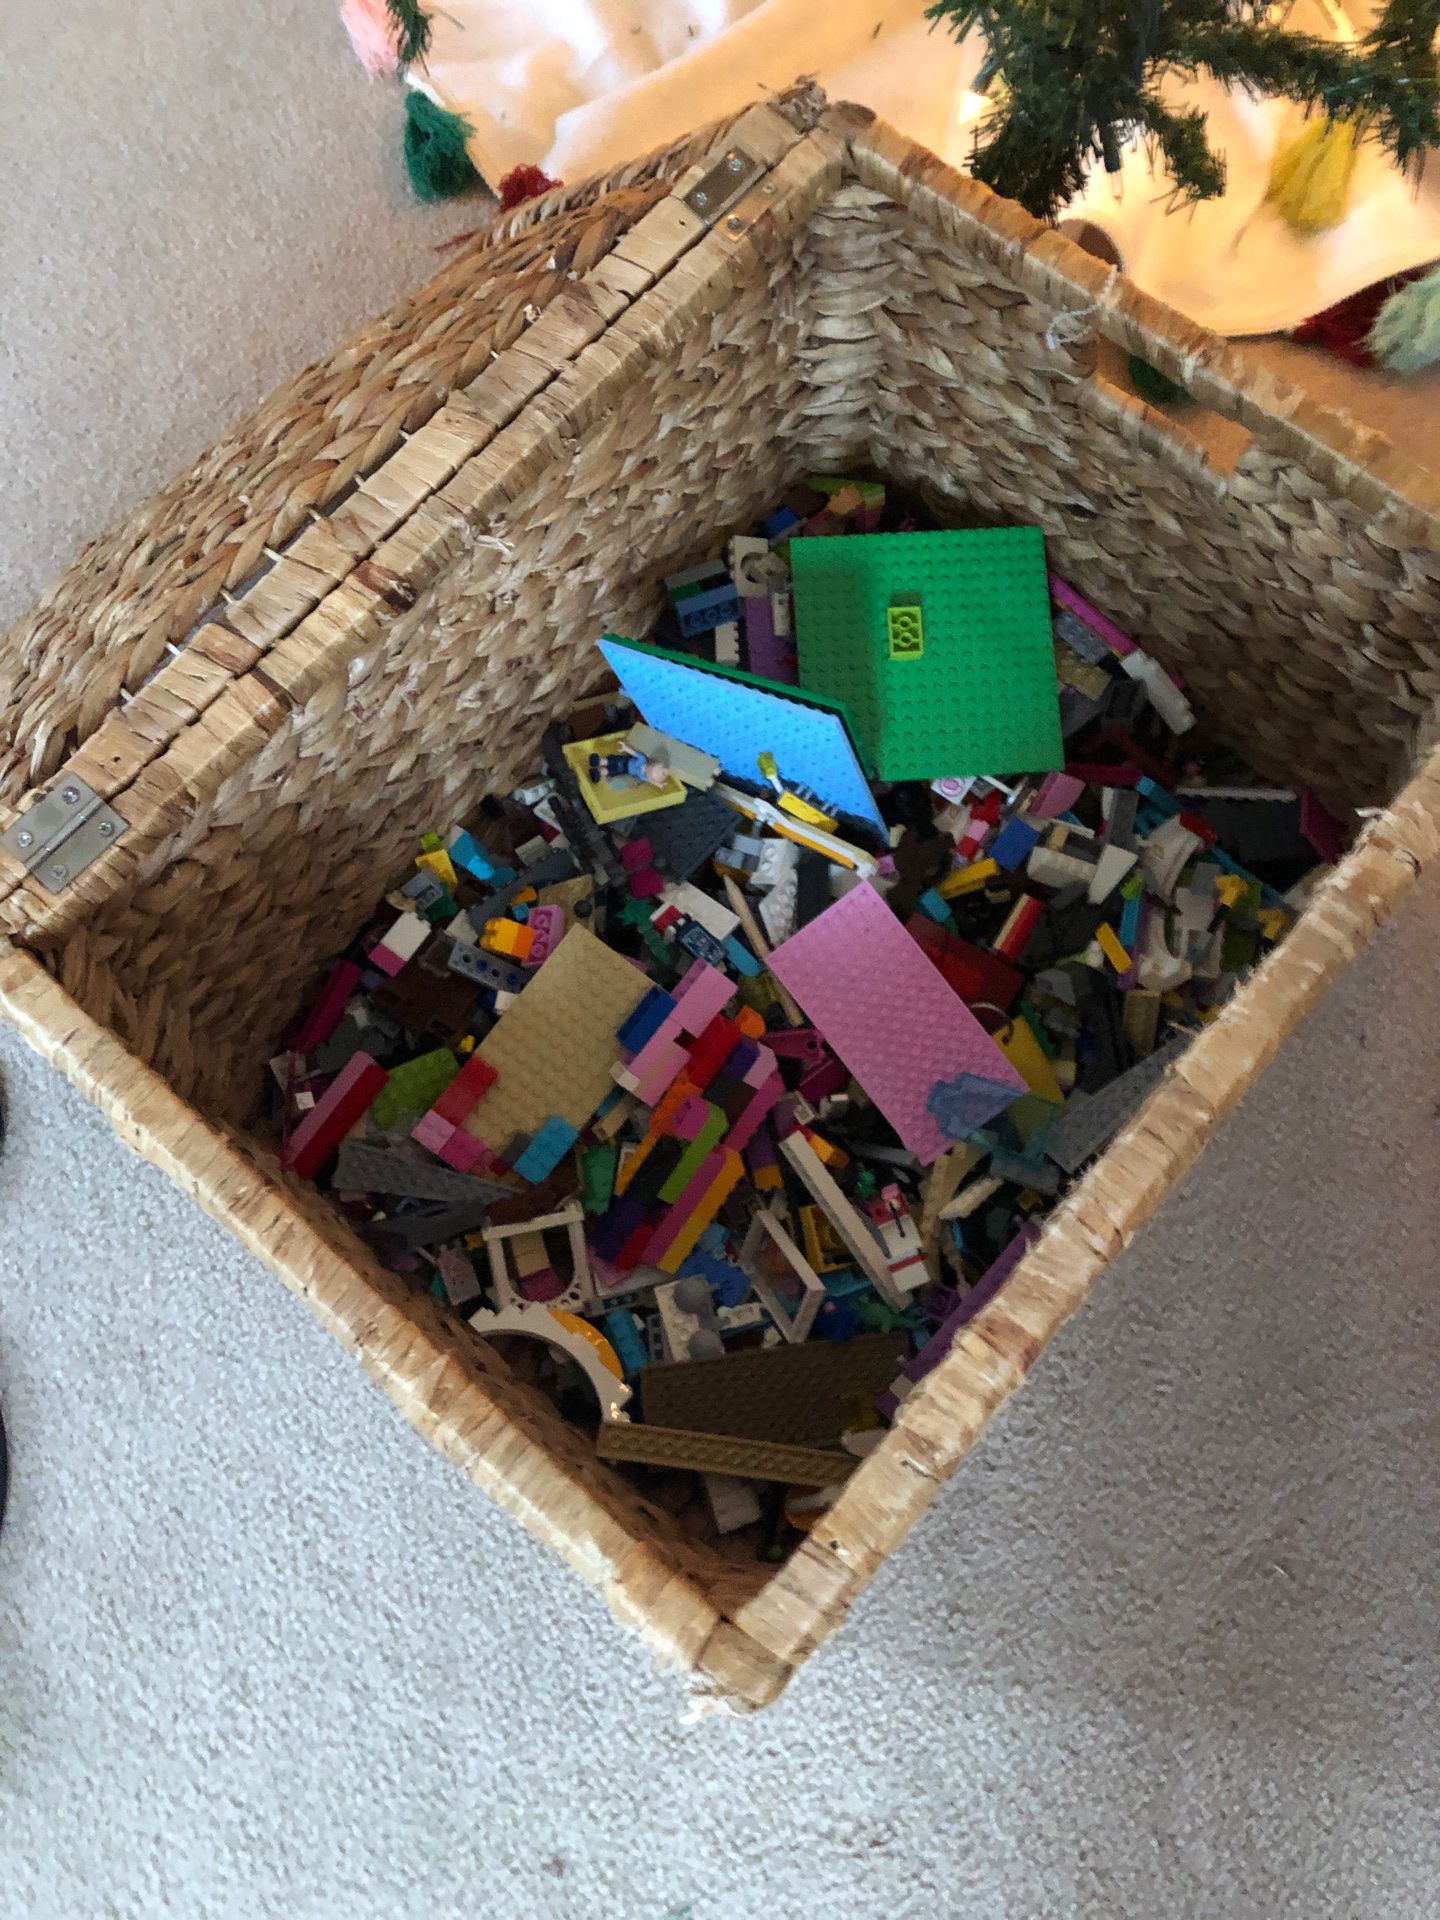 Basket of Random legos